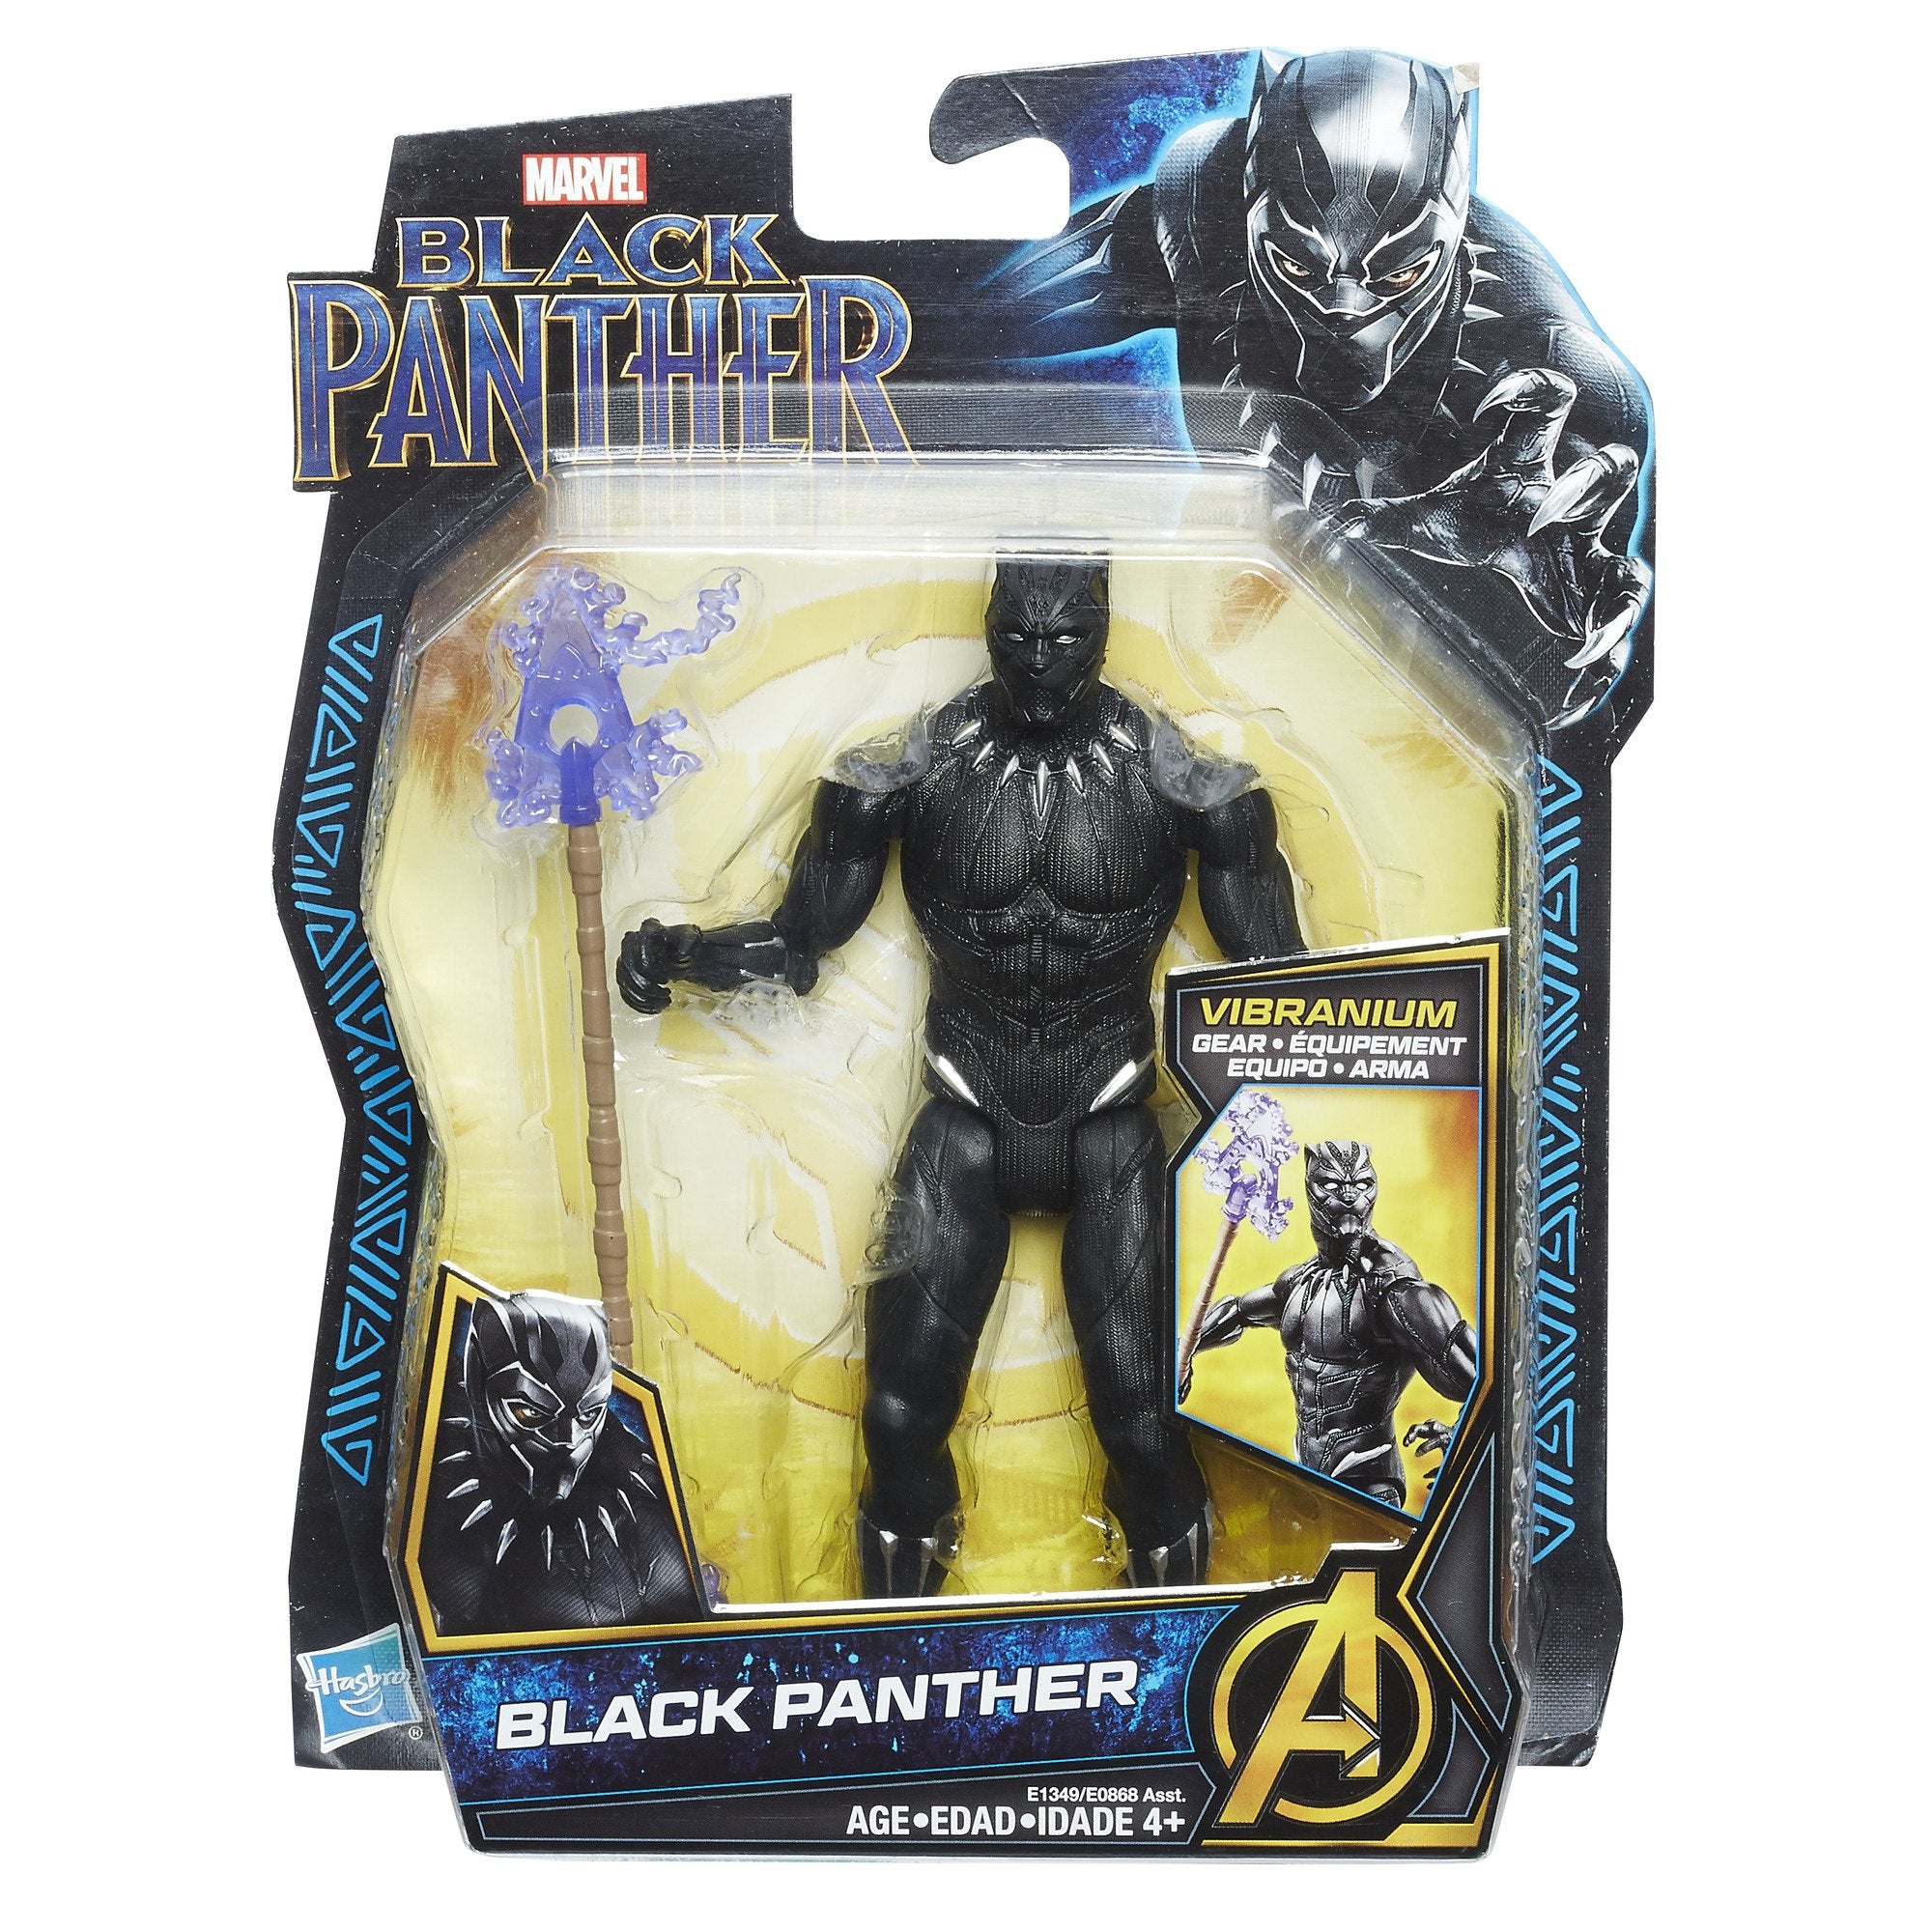 Marvel Black Panther 6-inch Black Panther